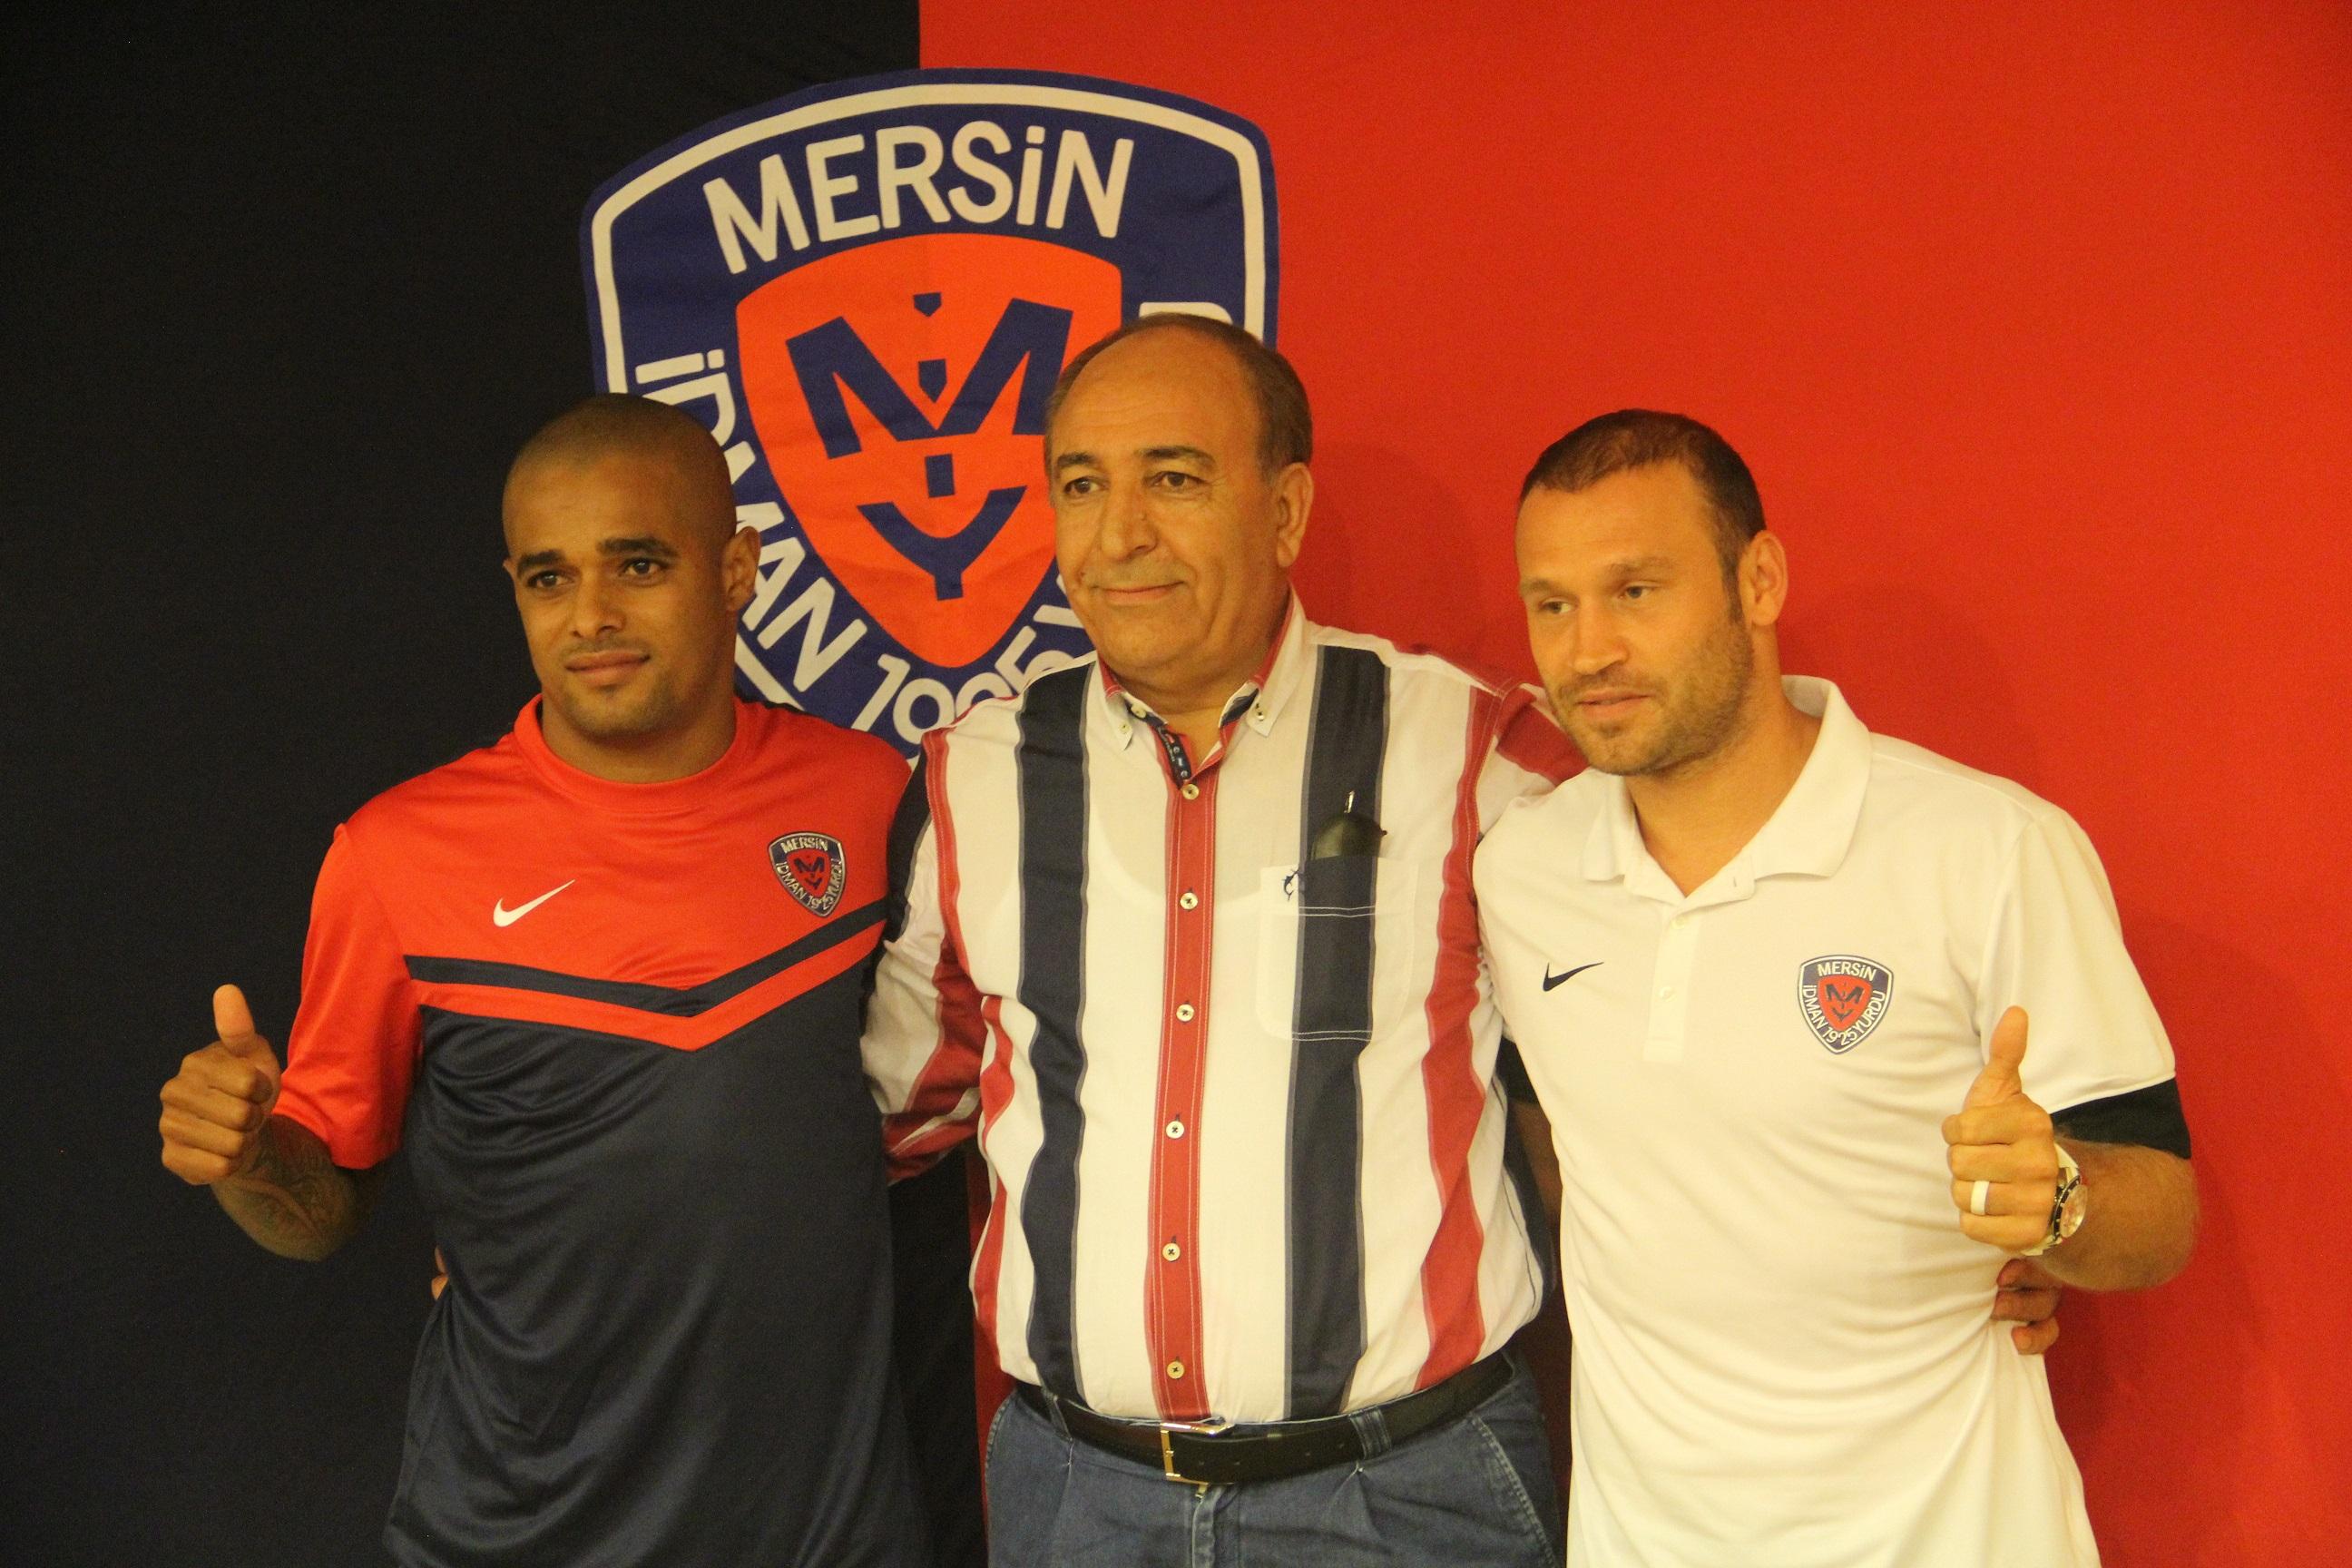 Welliton fez 13 gols pelo Mersin Idmanyurdu em 2015